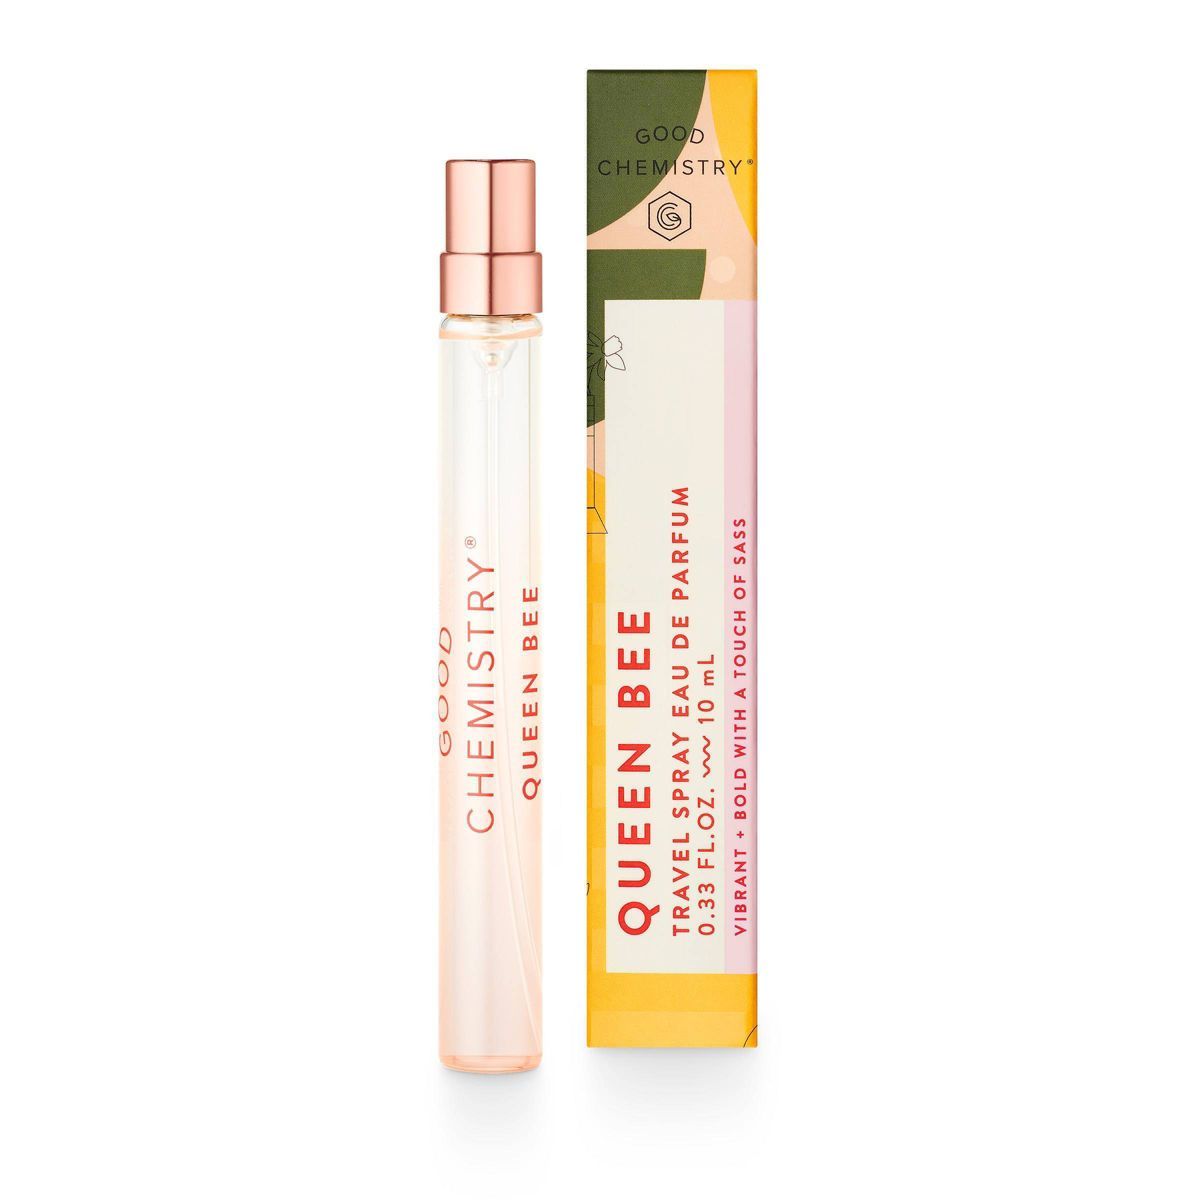 Good Chemistry® Travel Spray Eau De Parfum Perfume - Queen Bee - 0.34 fl oz | Target